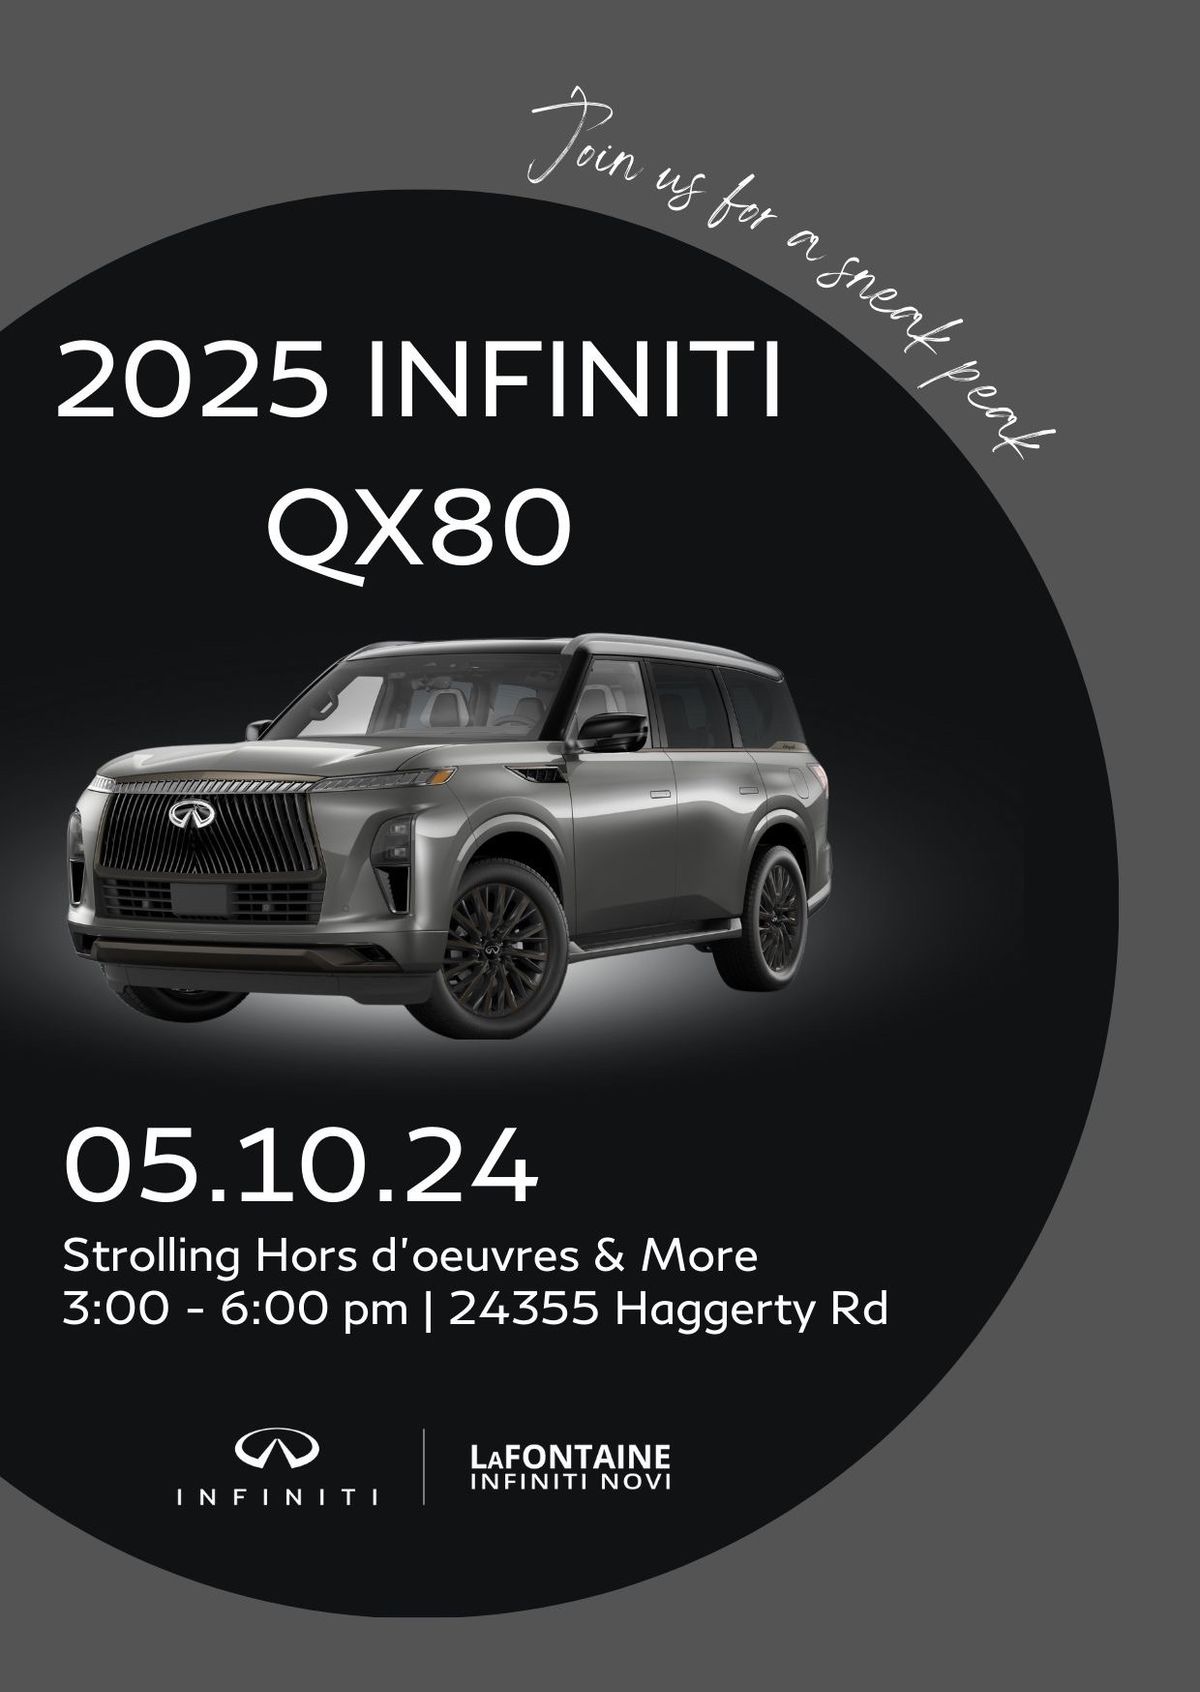 2025 INFINITI QX80